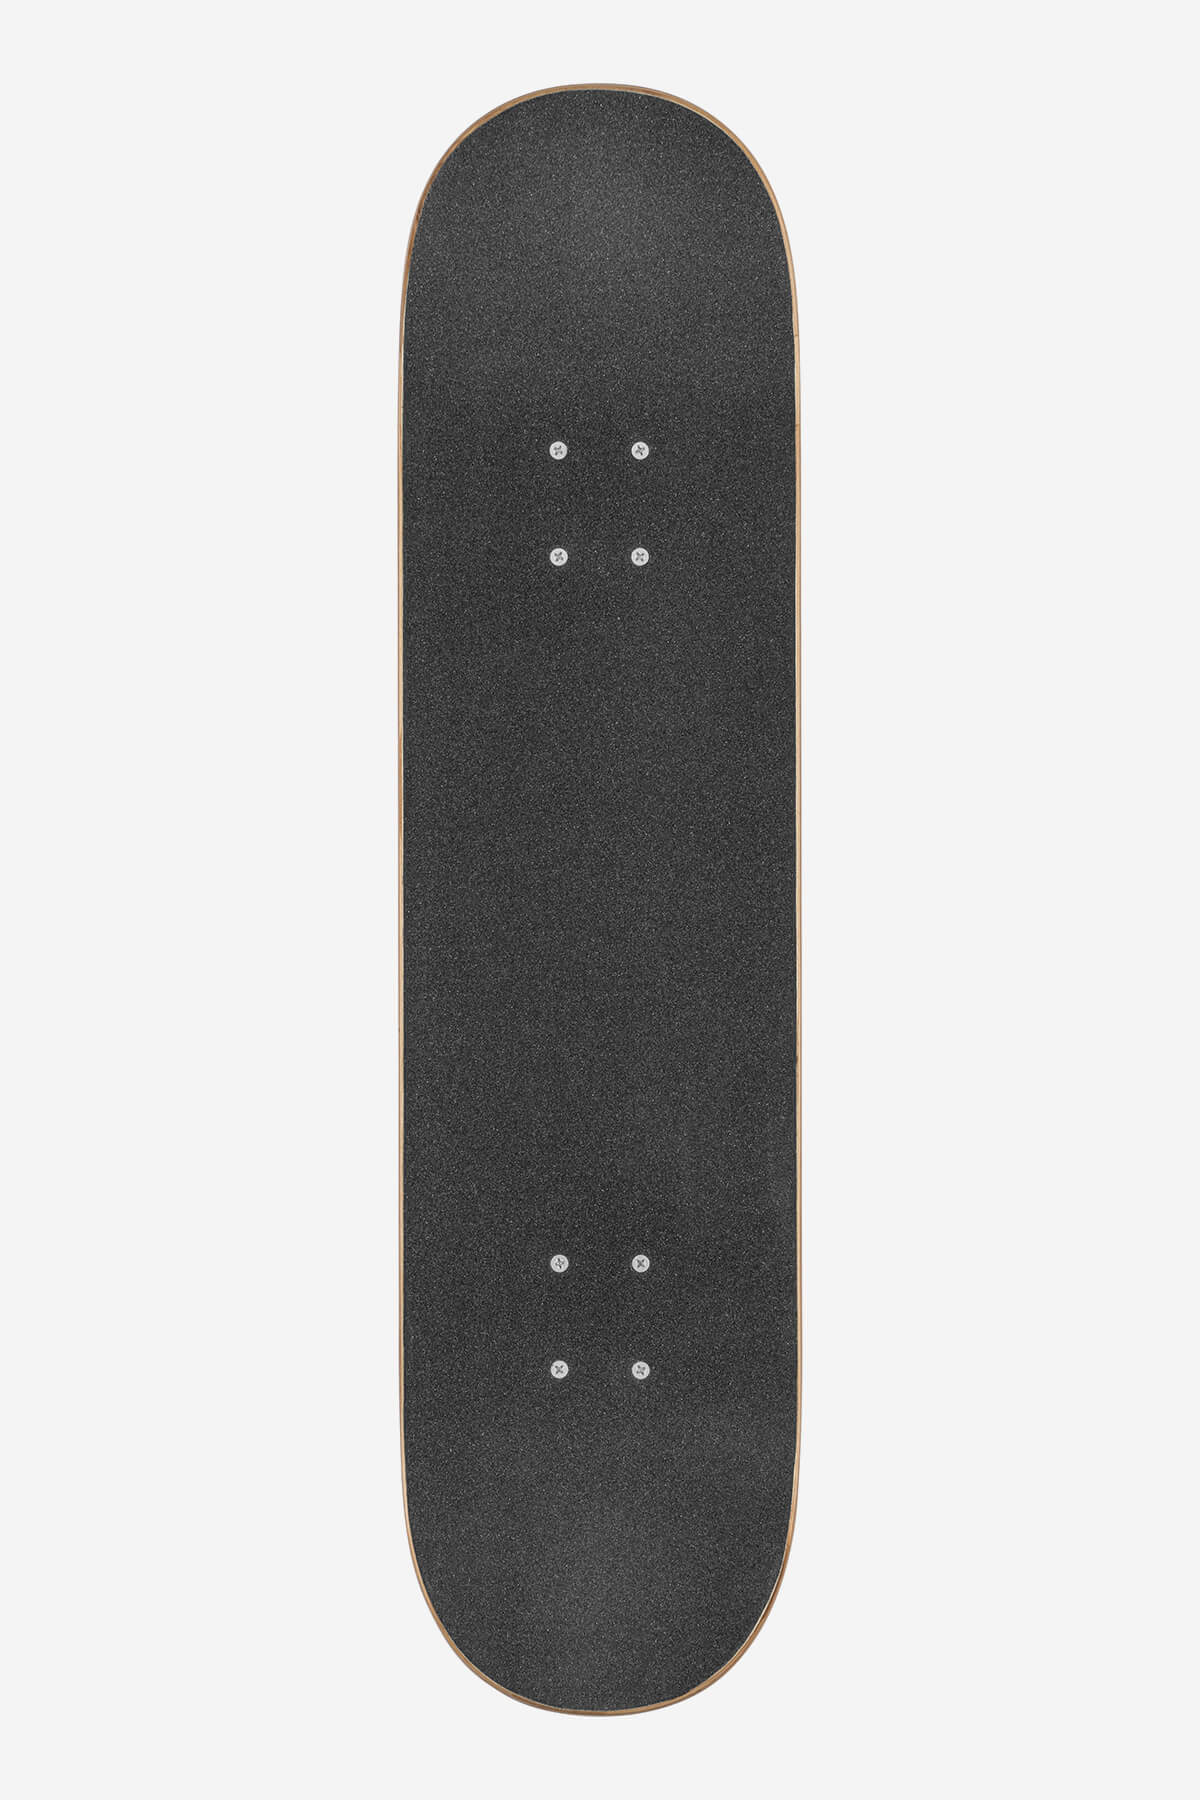 Globe - G0 Fubar - White/Black - 8.0" Complete Skateboard